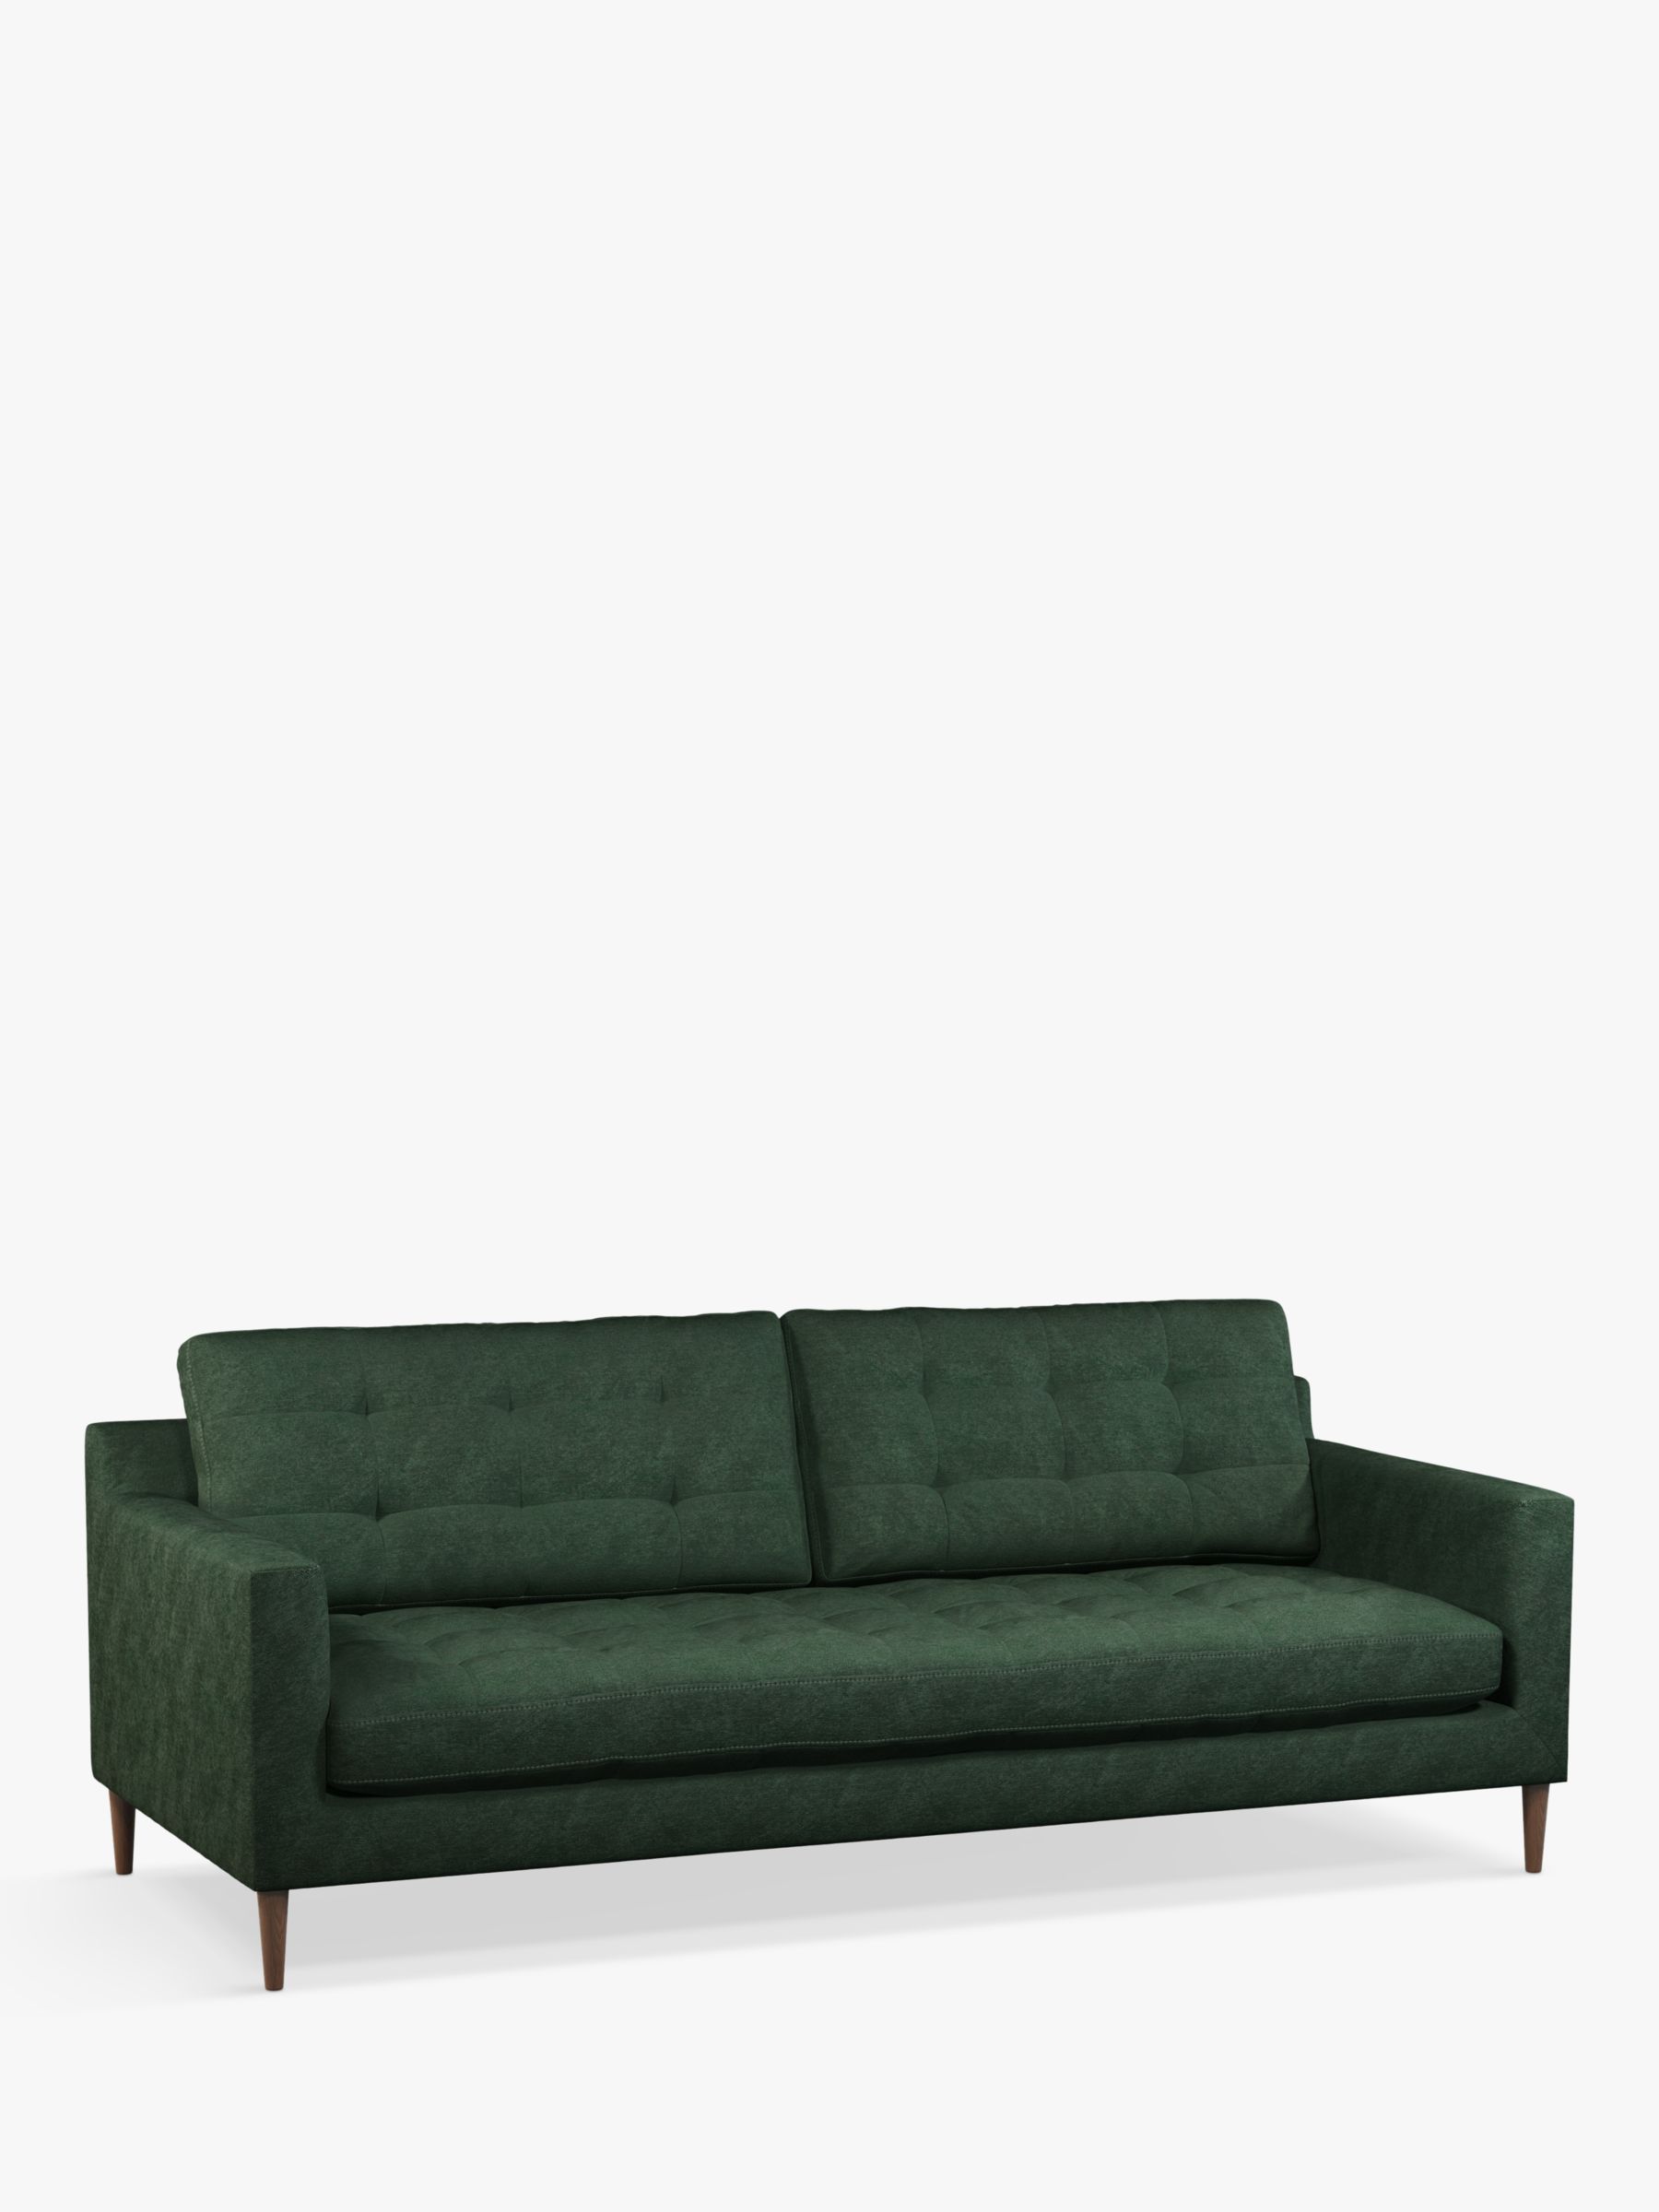 John Lewis & Partners Draper Large 3 Seater Sofa, Dark Leg, Charm Forest Green